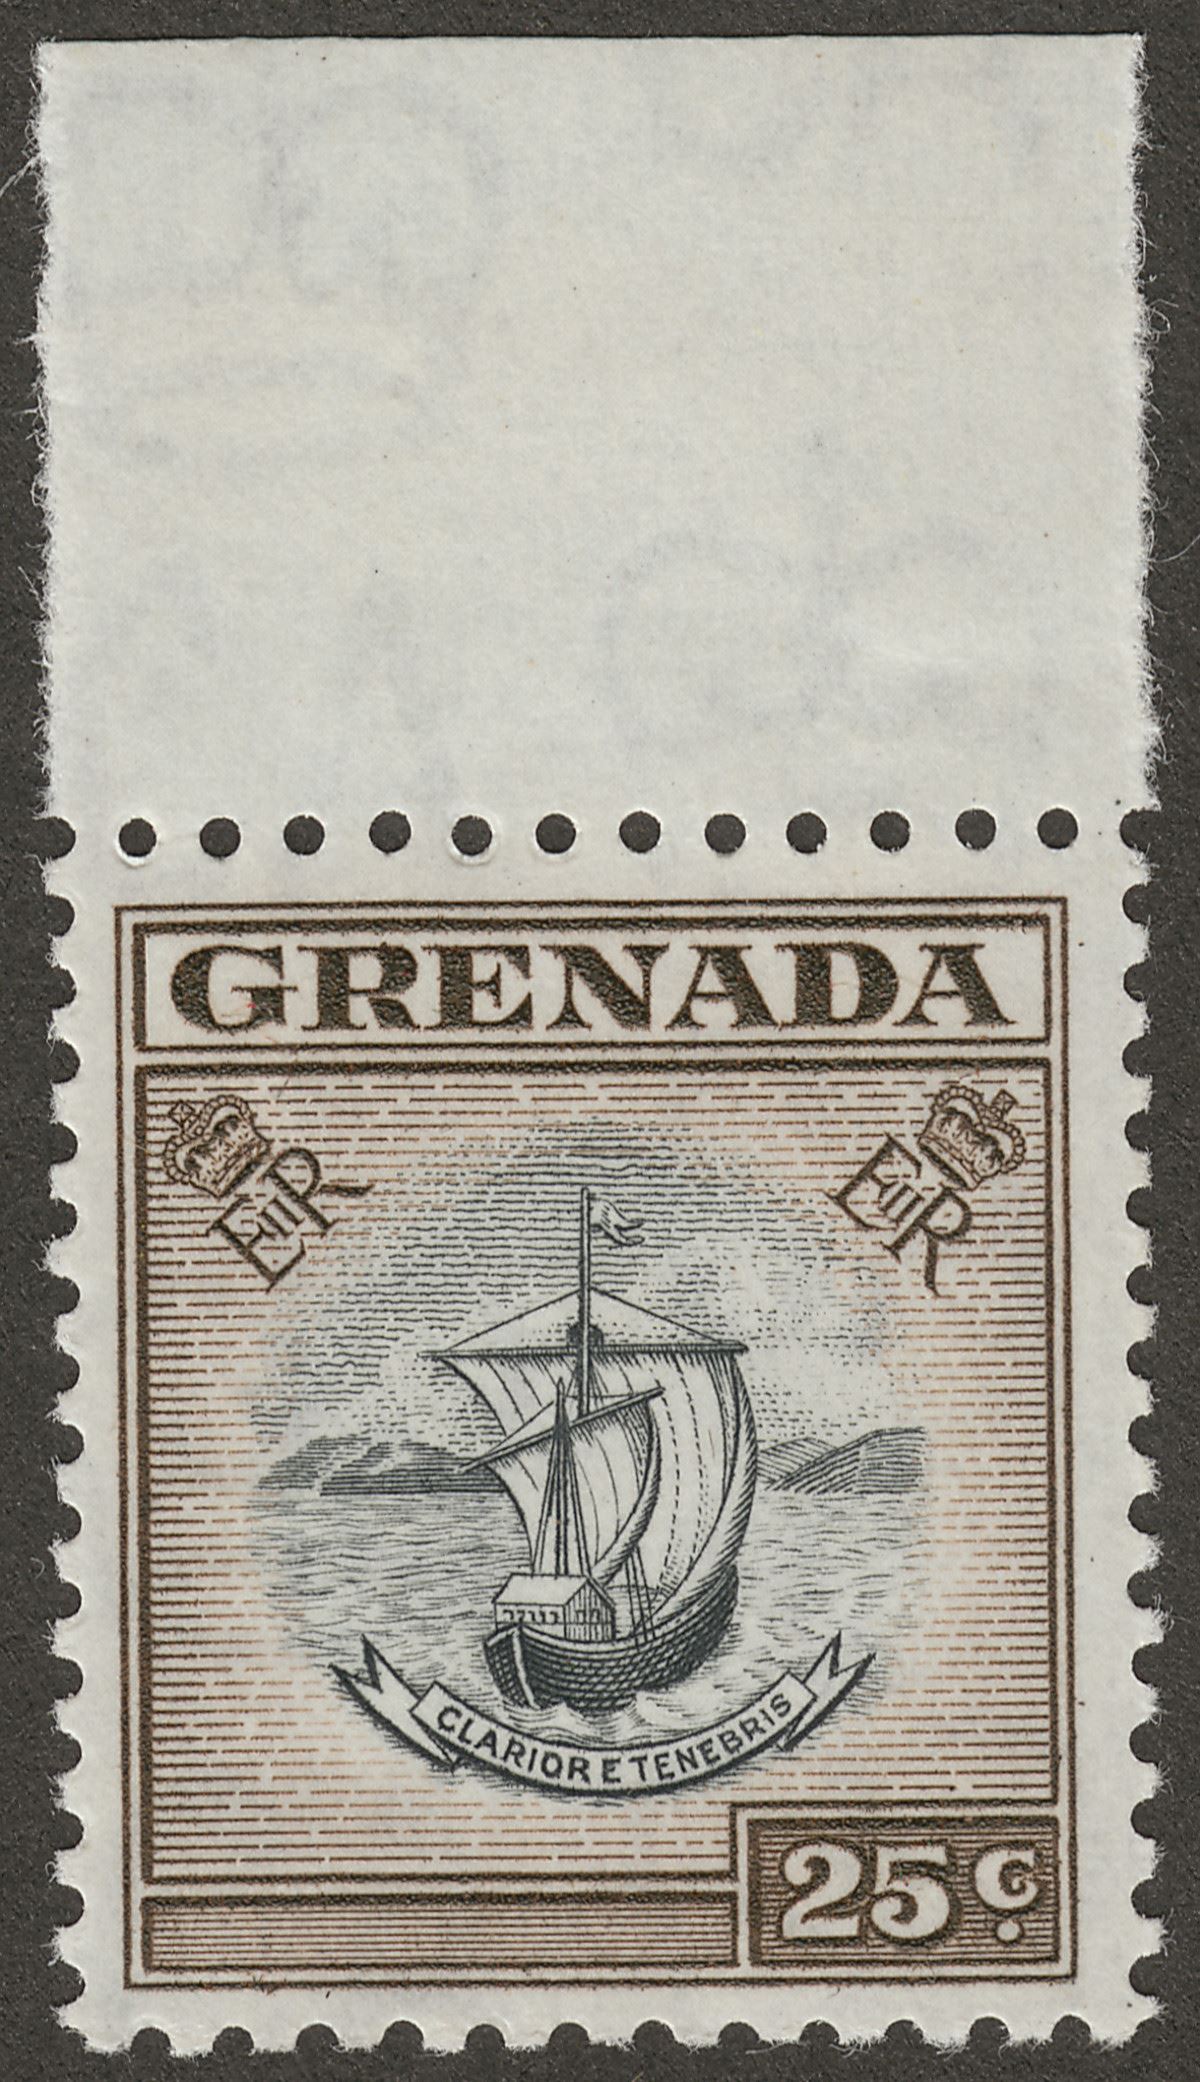 Grenada 1964 QEII 25c Black and Sepia Mint SG220